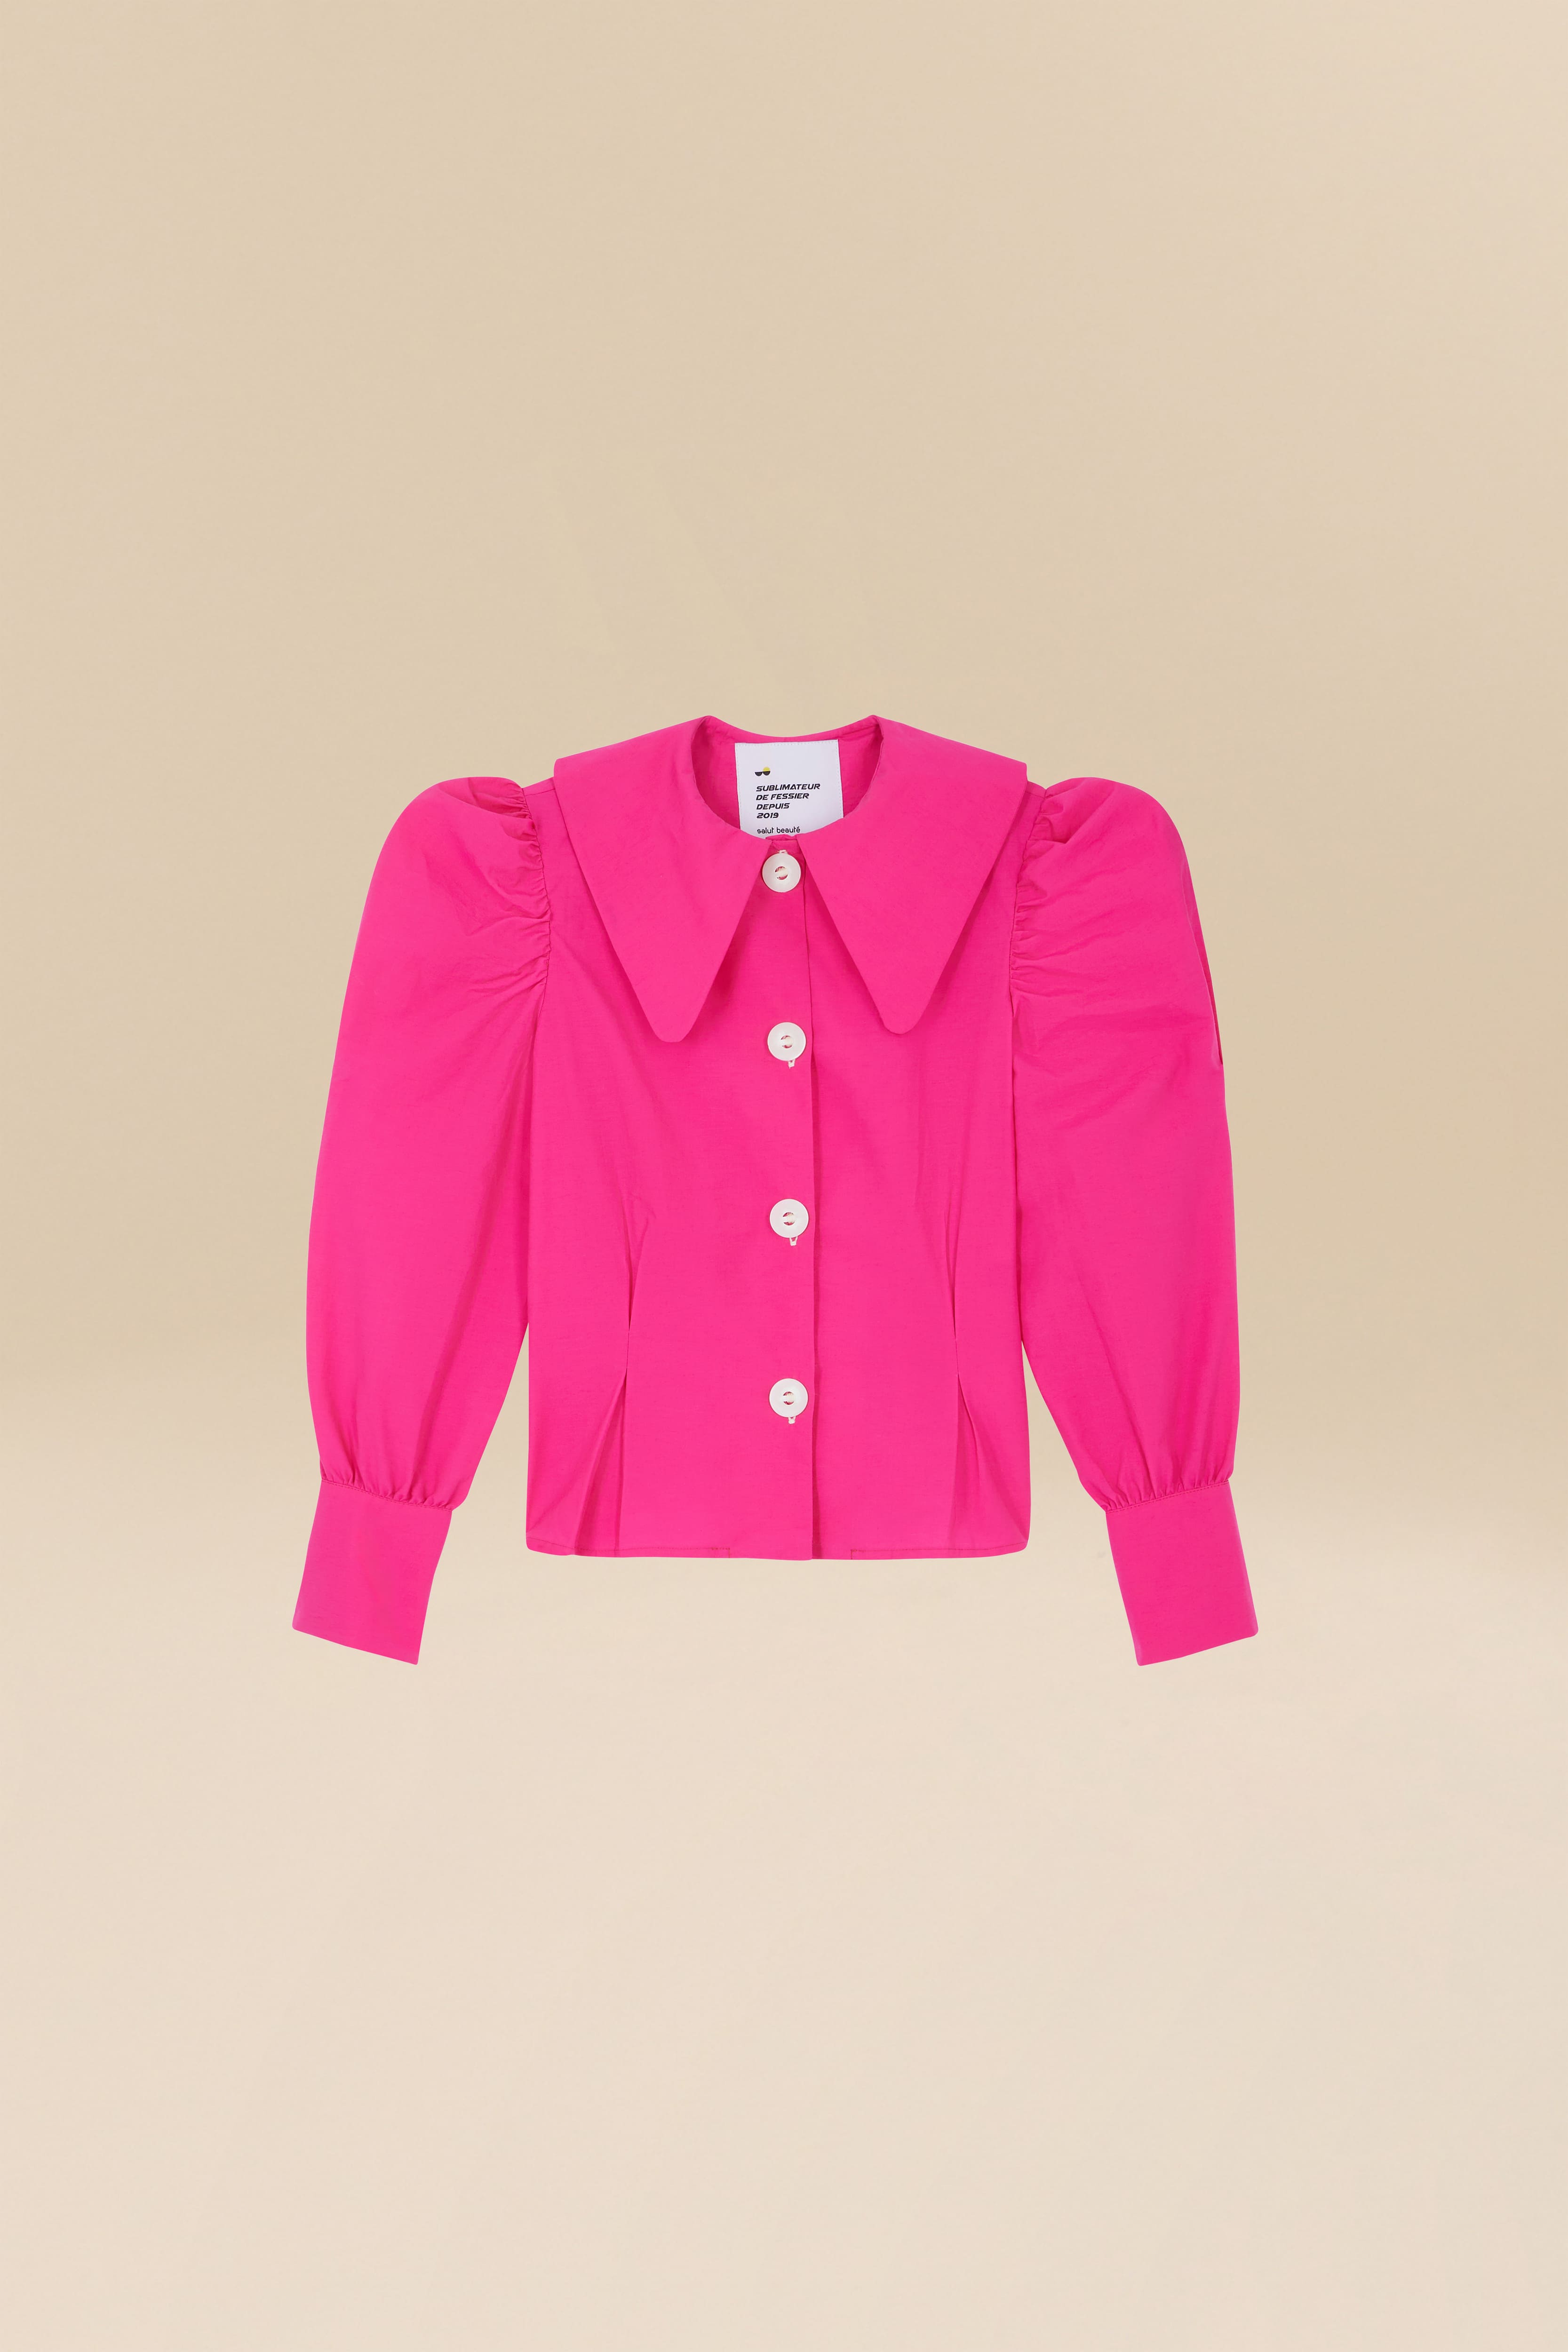 blouse rose - the gangster uniform